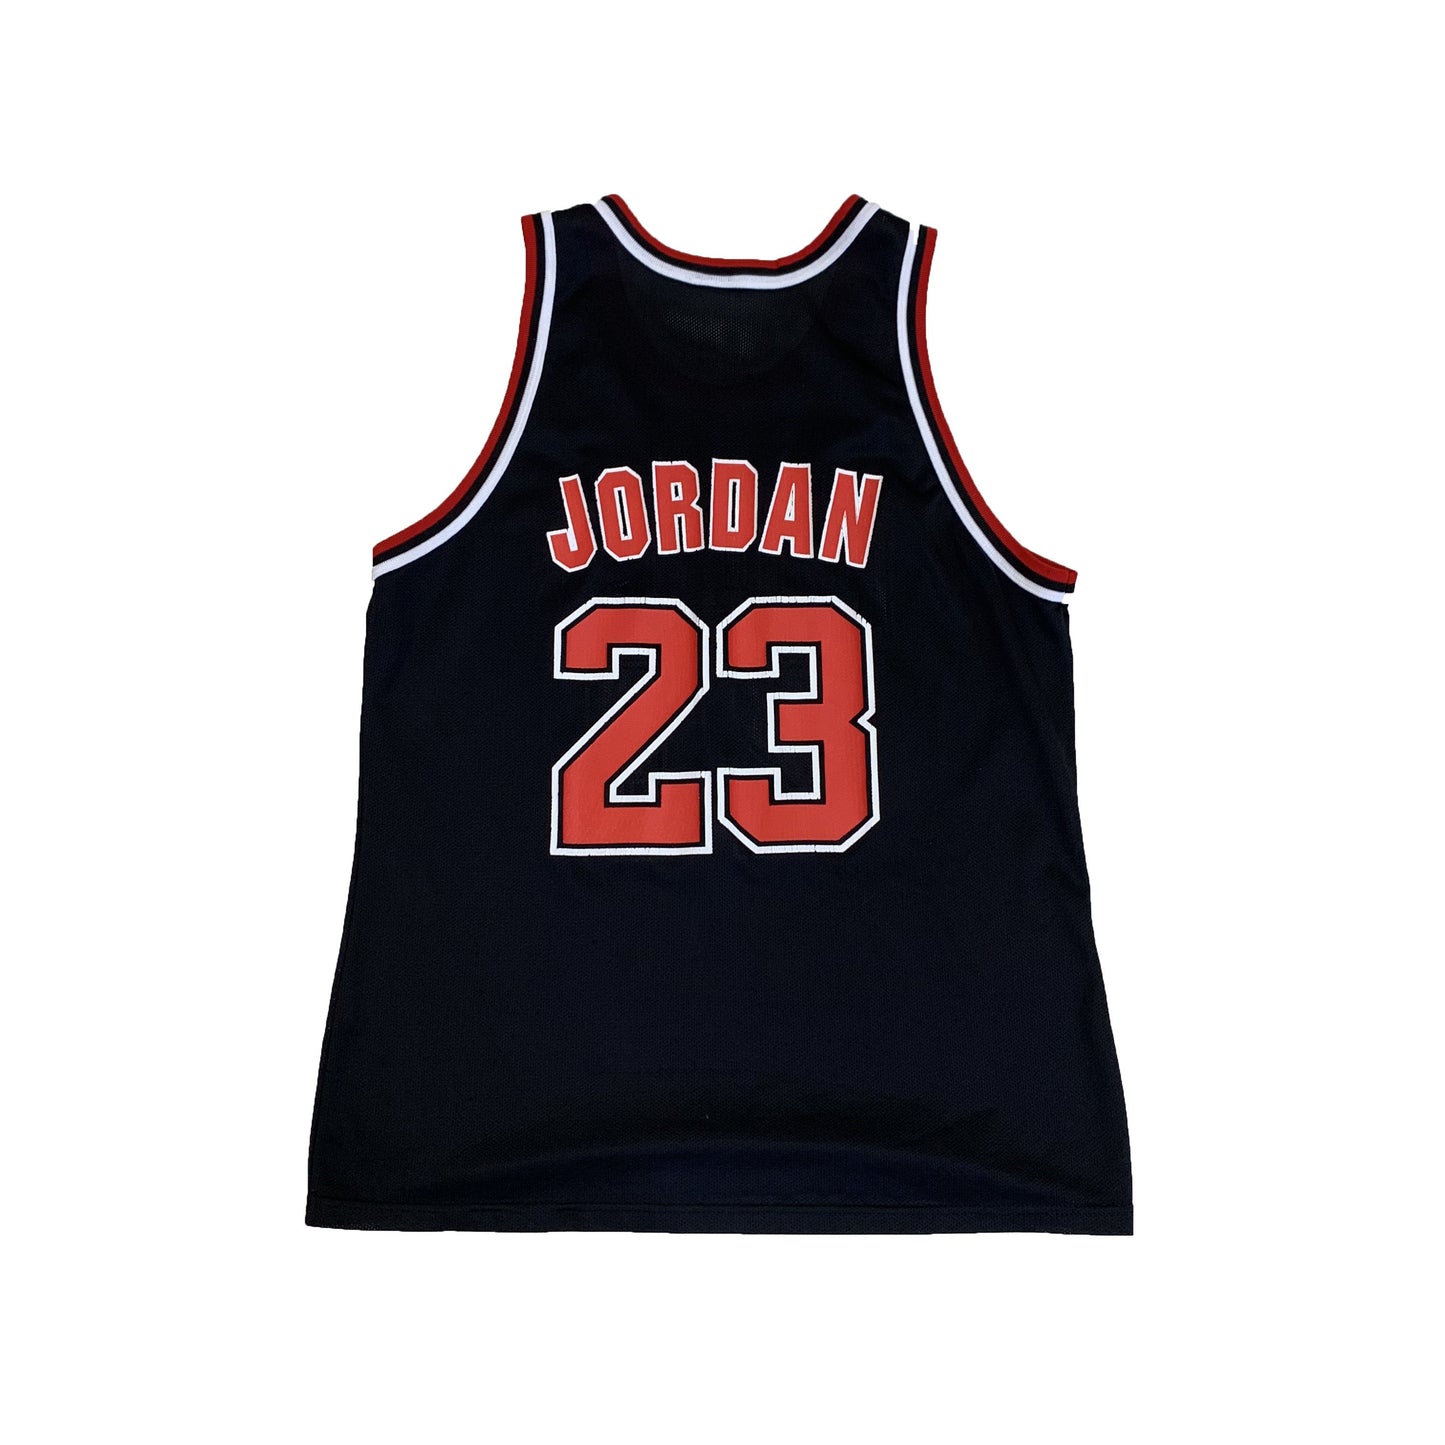 1990s Chicago Bulls Champion Jordan Jersey (Black)